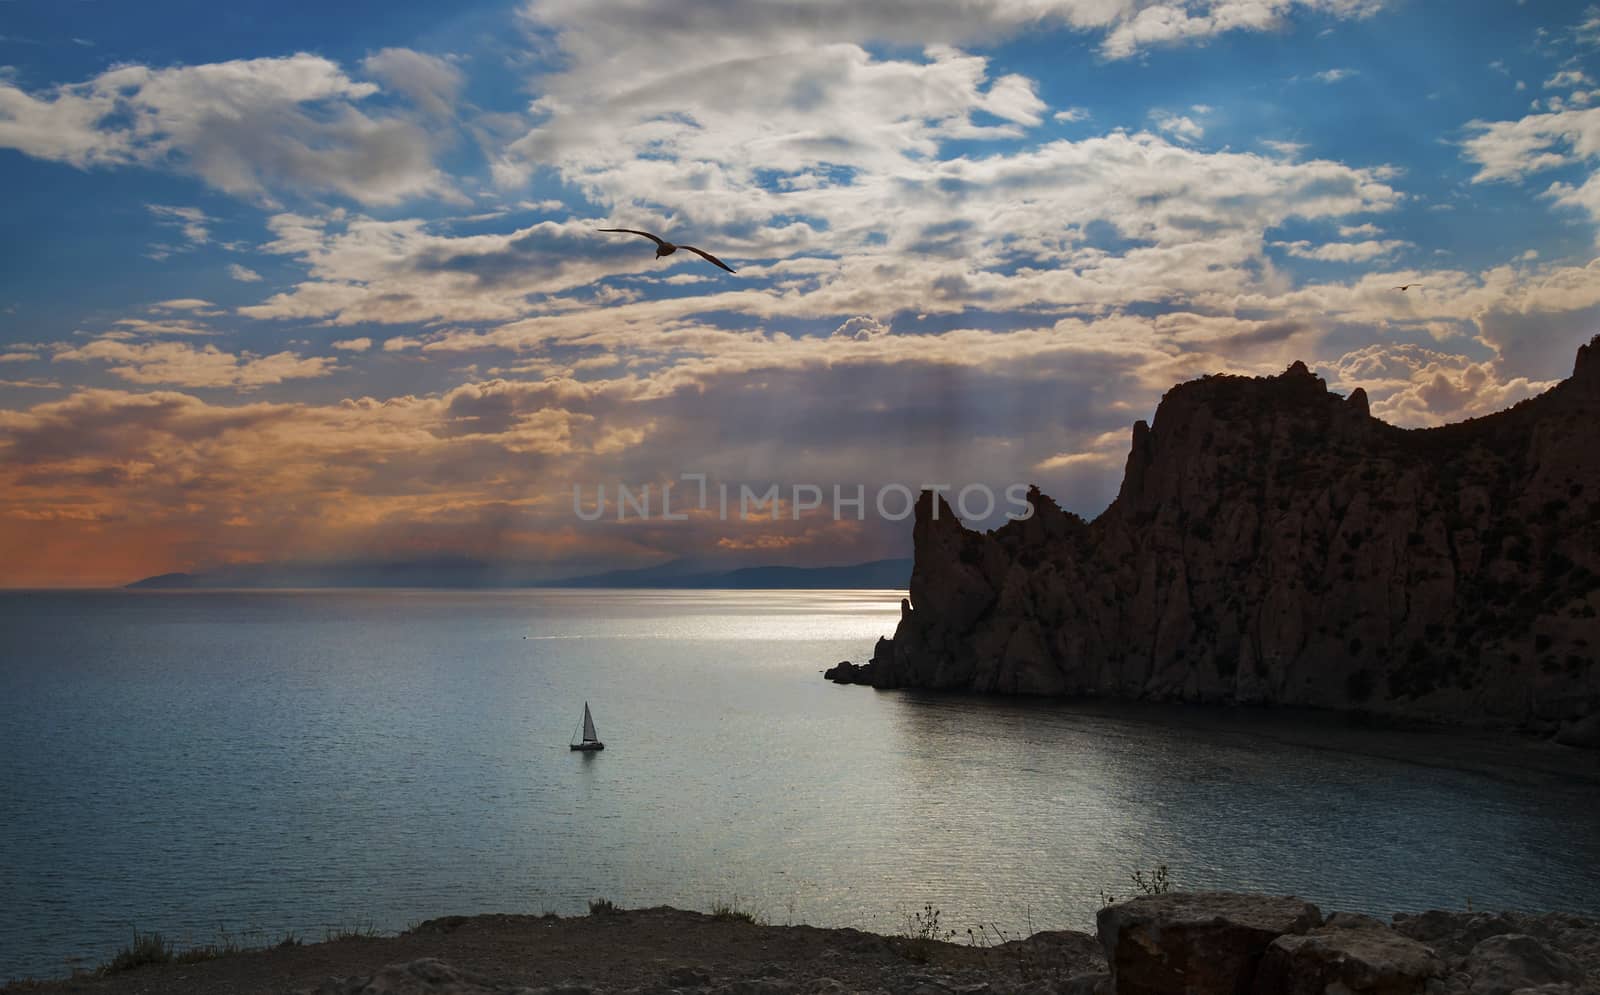 Evening landscape with sunset and clouds over a calm sea, cliffs, seagulls and a sailboat, Crimea, Novy Svet.